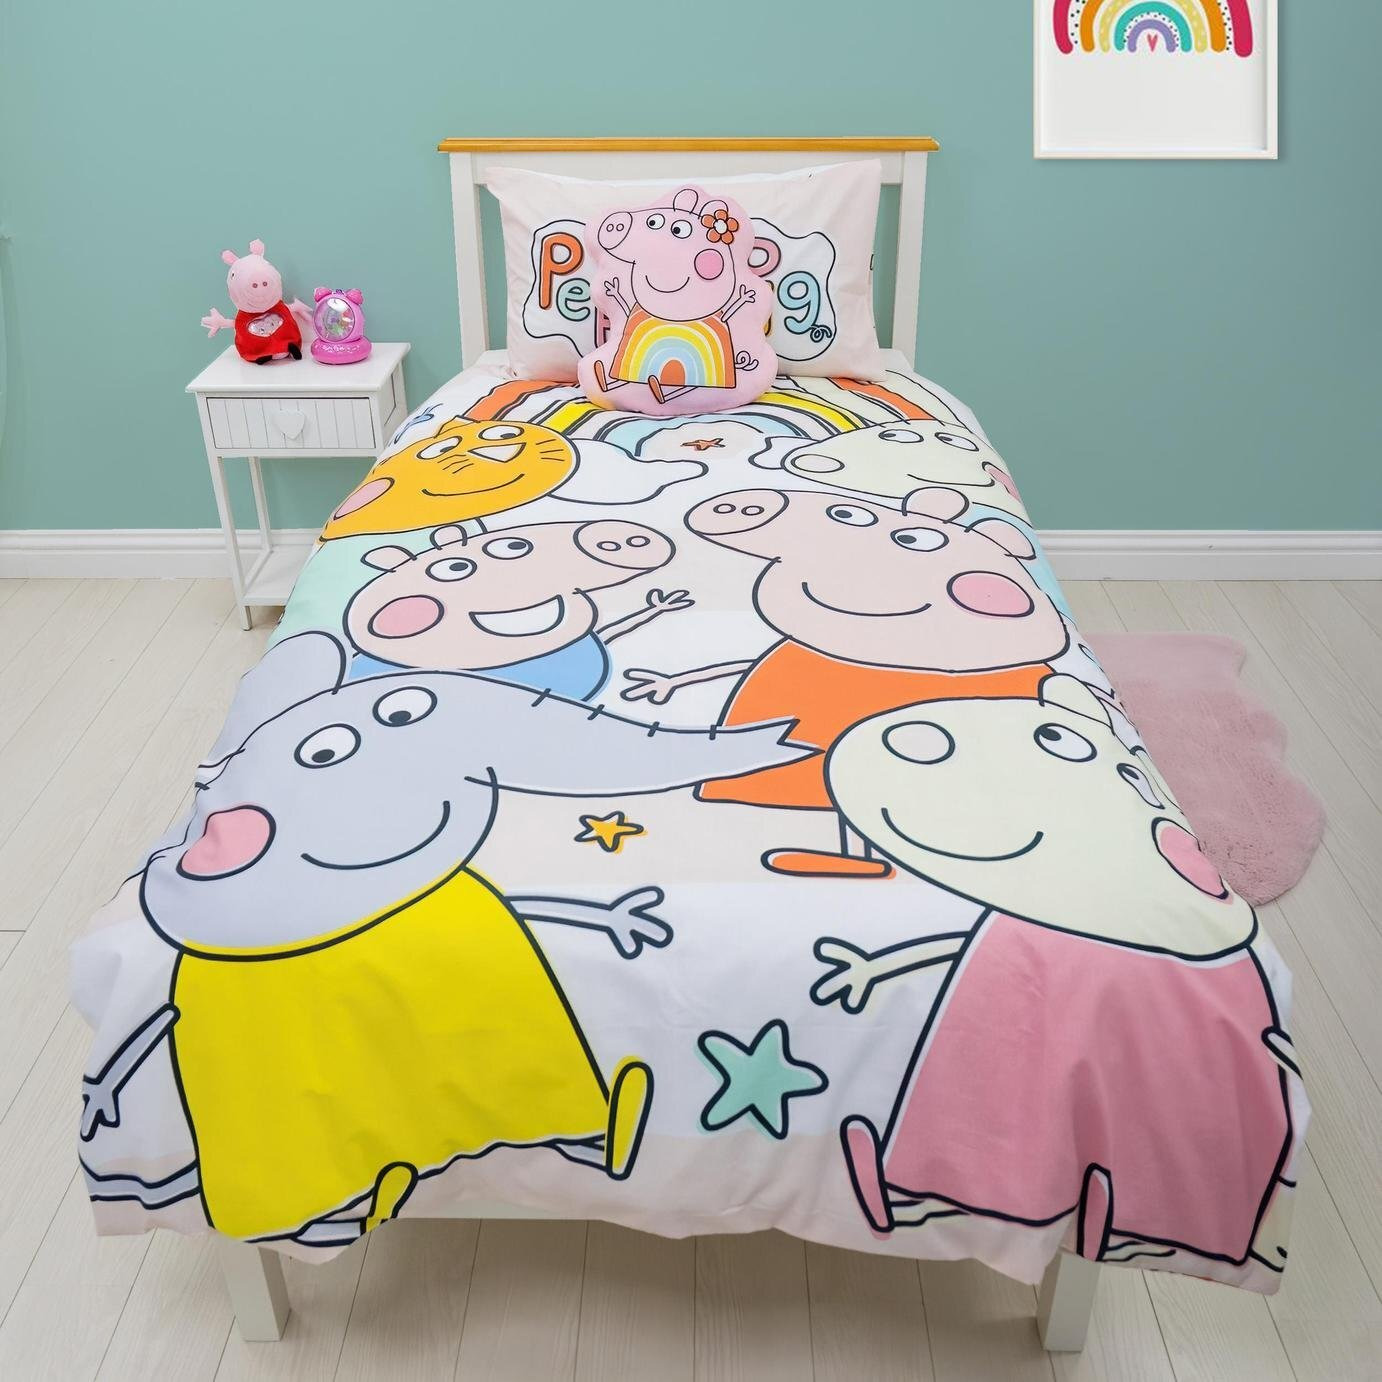 Peppa Pig Kids Bedding Set - Single - image 1